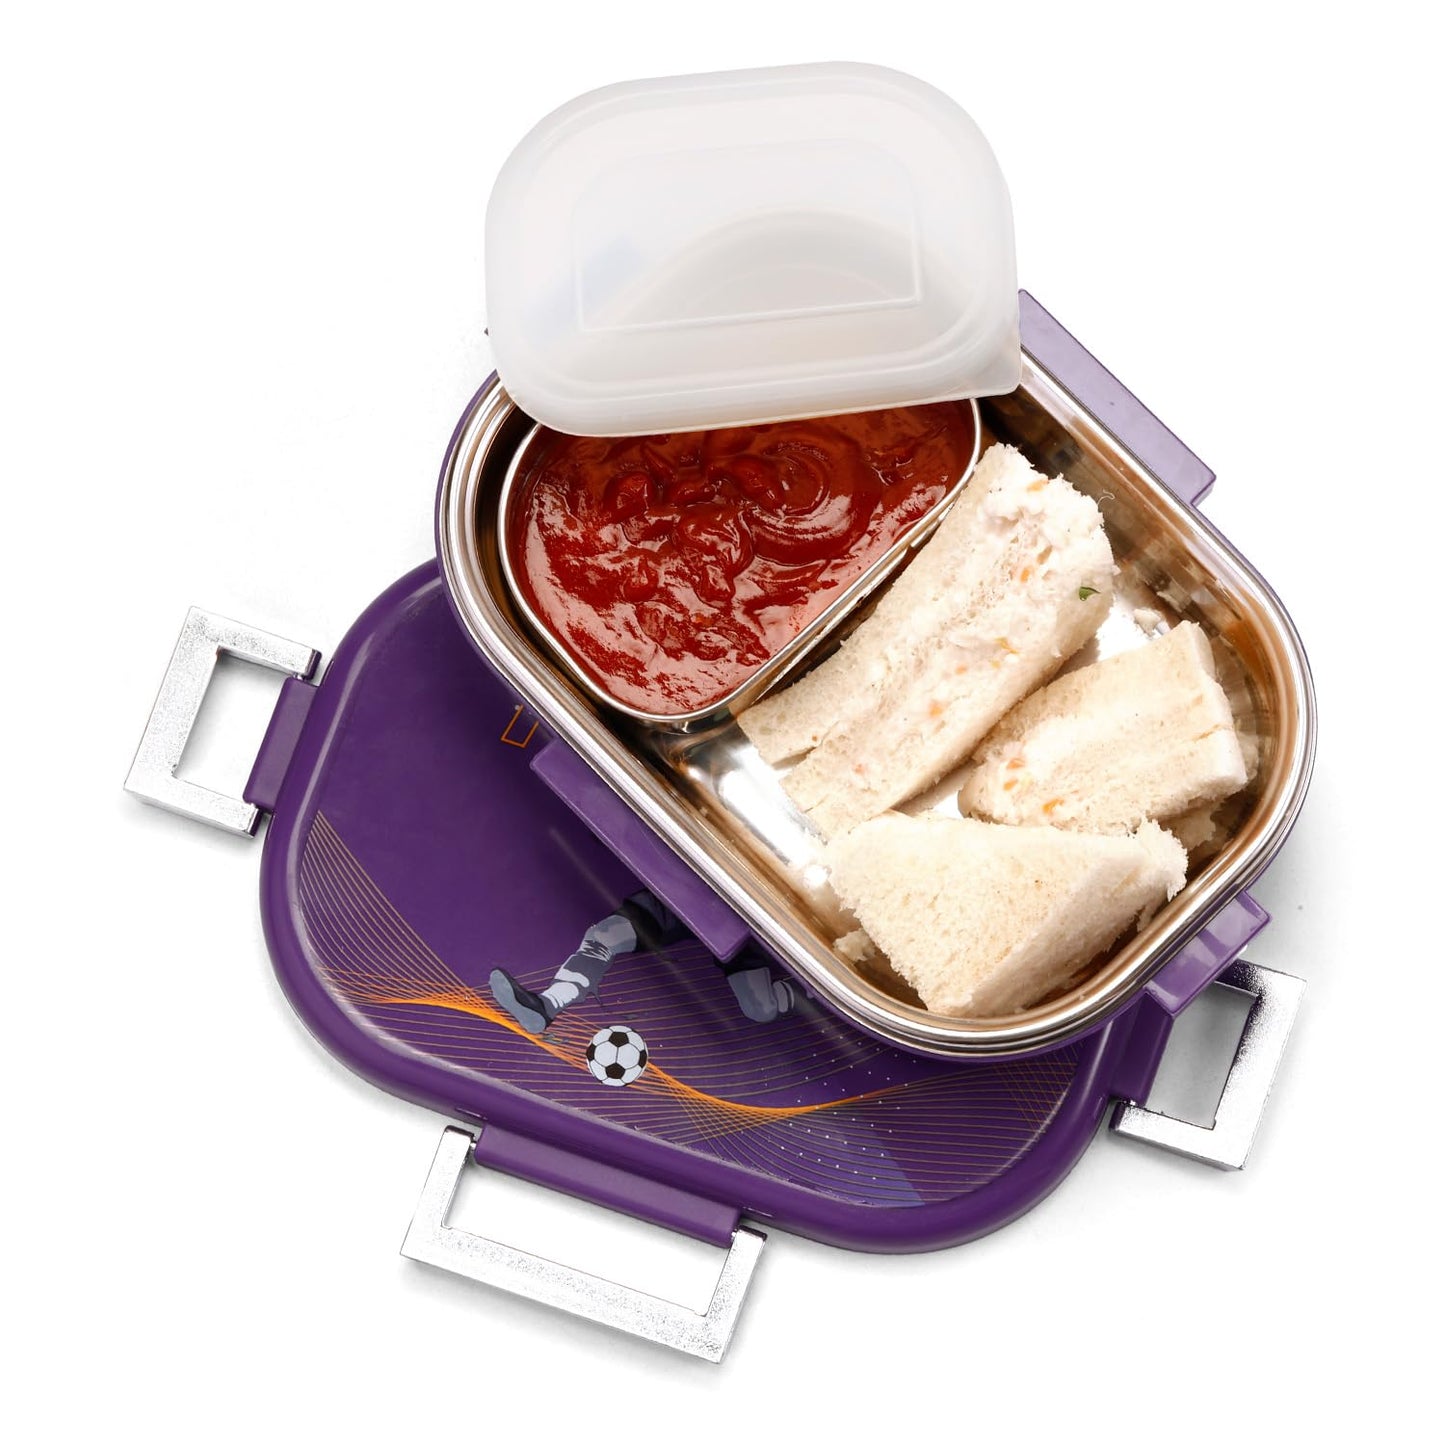 Snacky Lunch Box